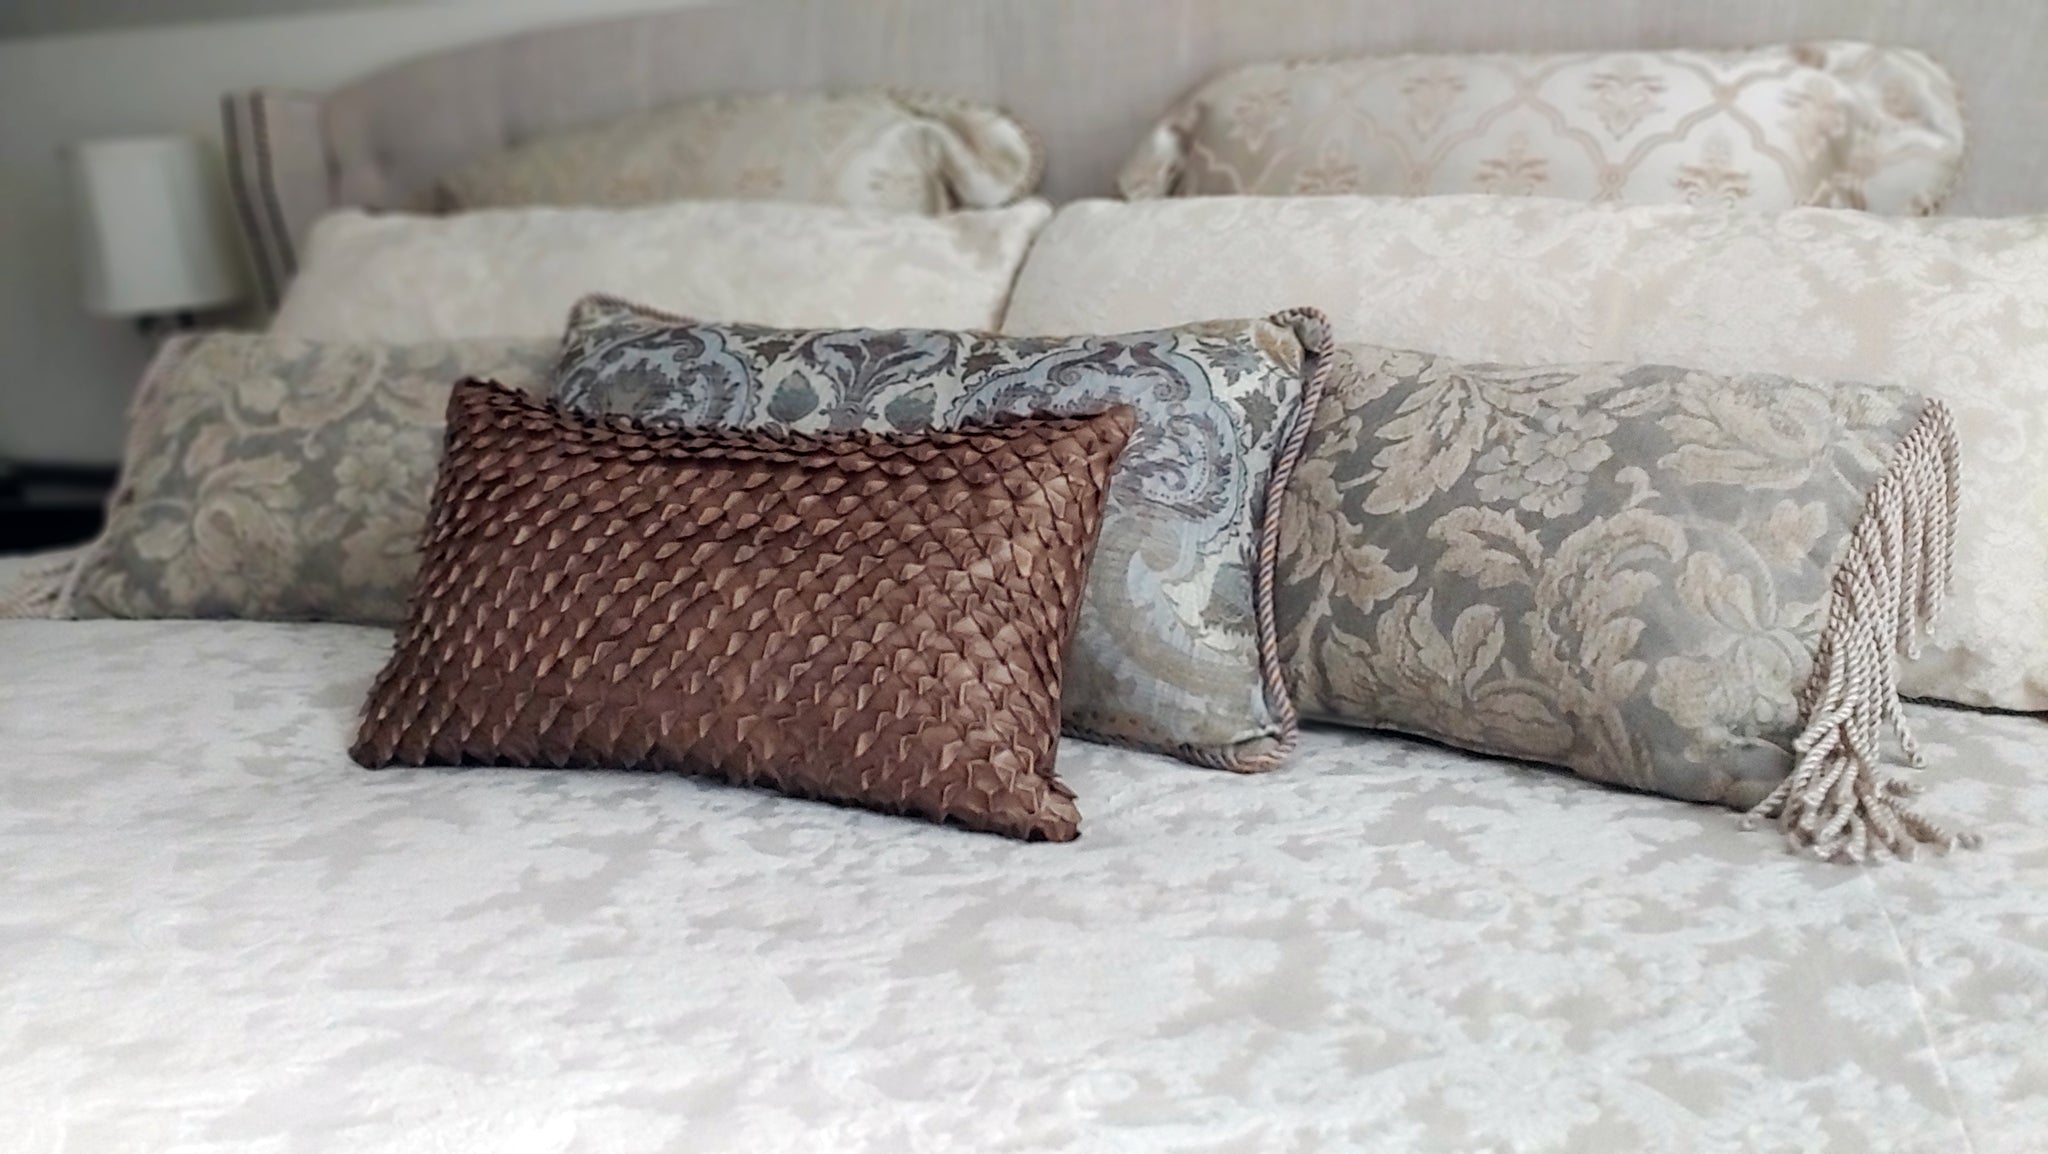 Leather Dragon Scales Decorative Pillow, Metallic Lambskin; Bronze, Silver, Gunmetal, White, 12 x 20 Designer Lumbar Pillow